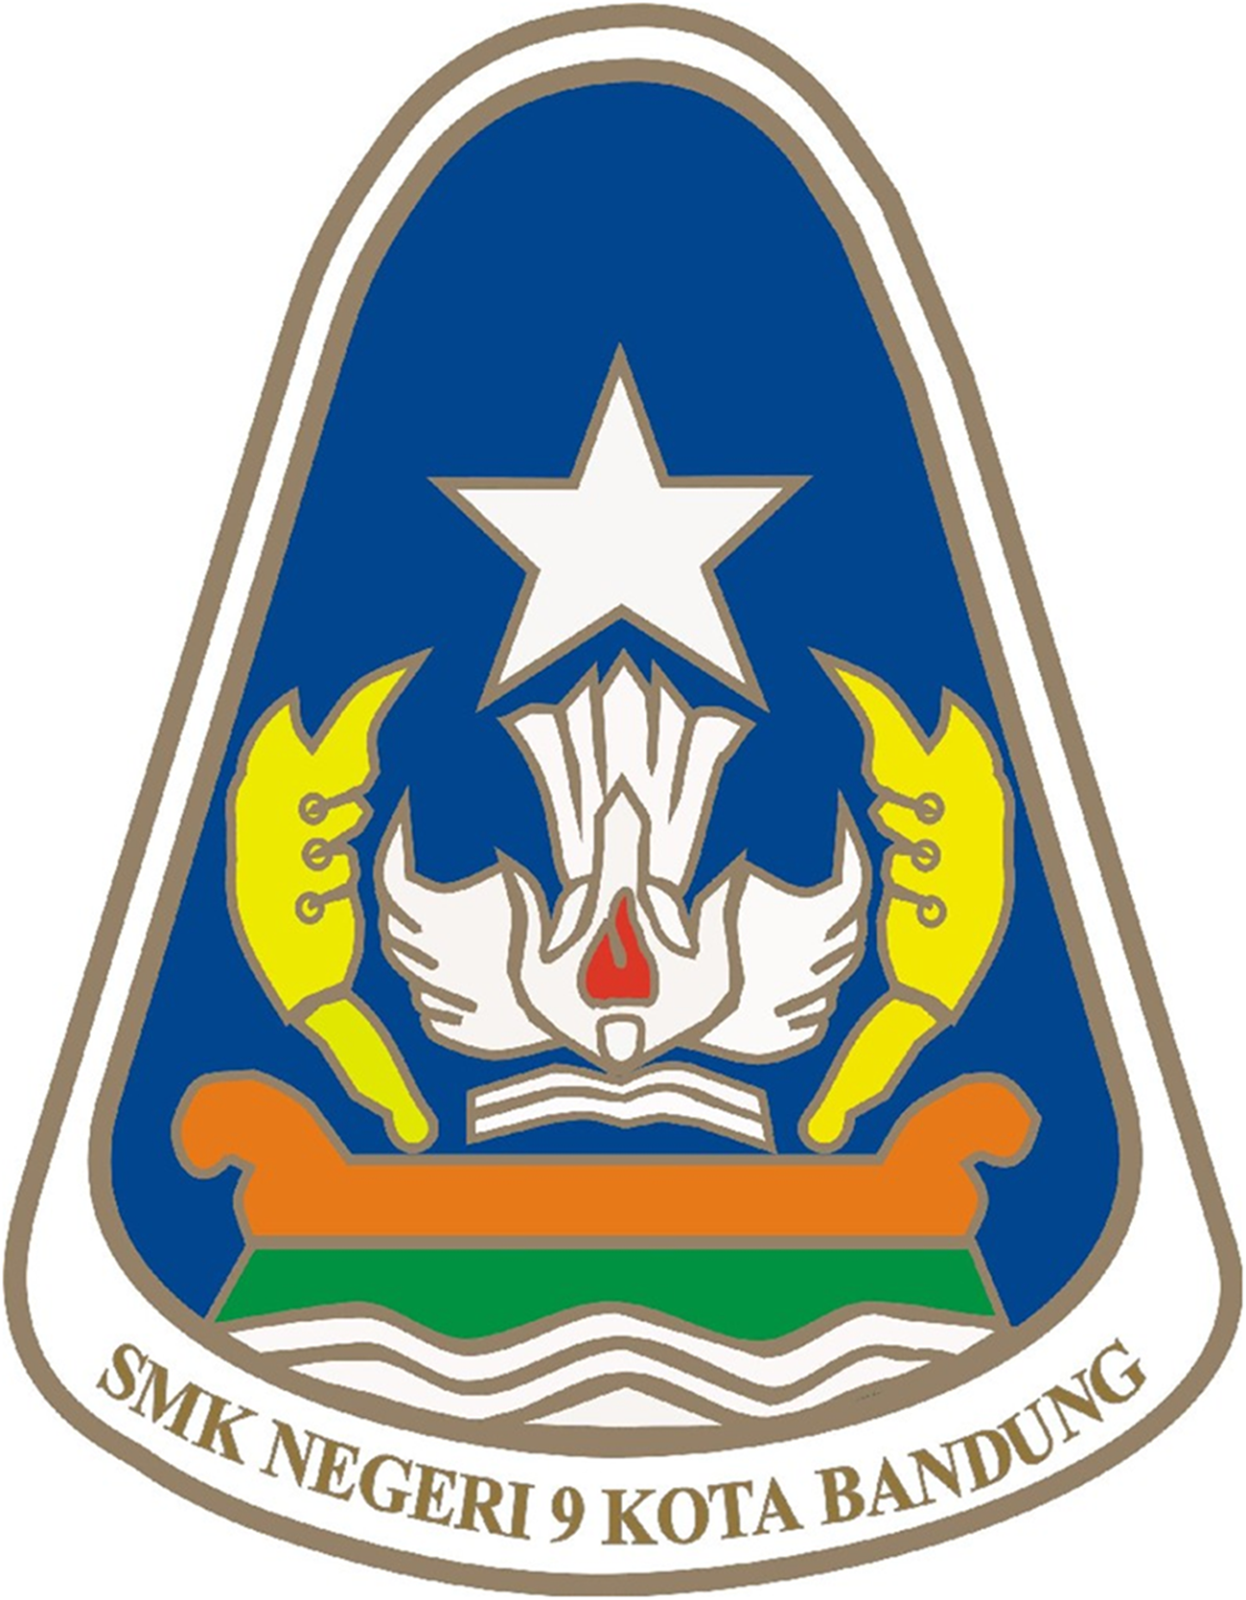 Dalam Catatan Logo Smkn9 Bandung Smk 9 Bandung Logo Smk 9